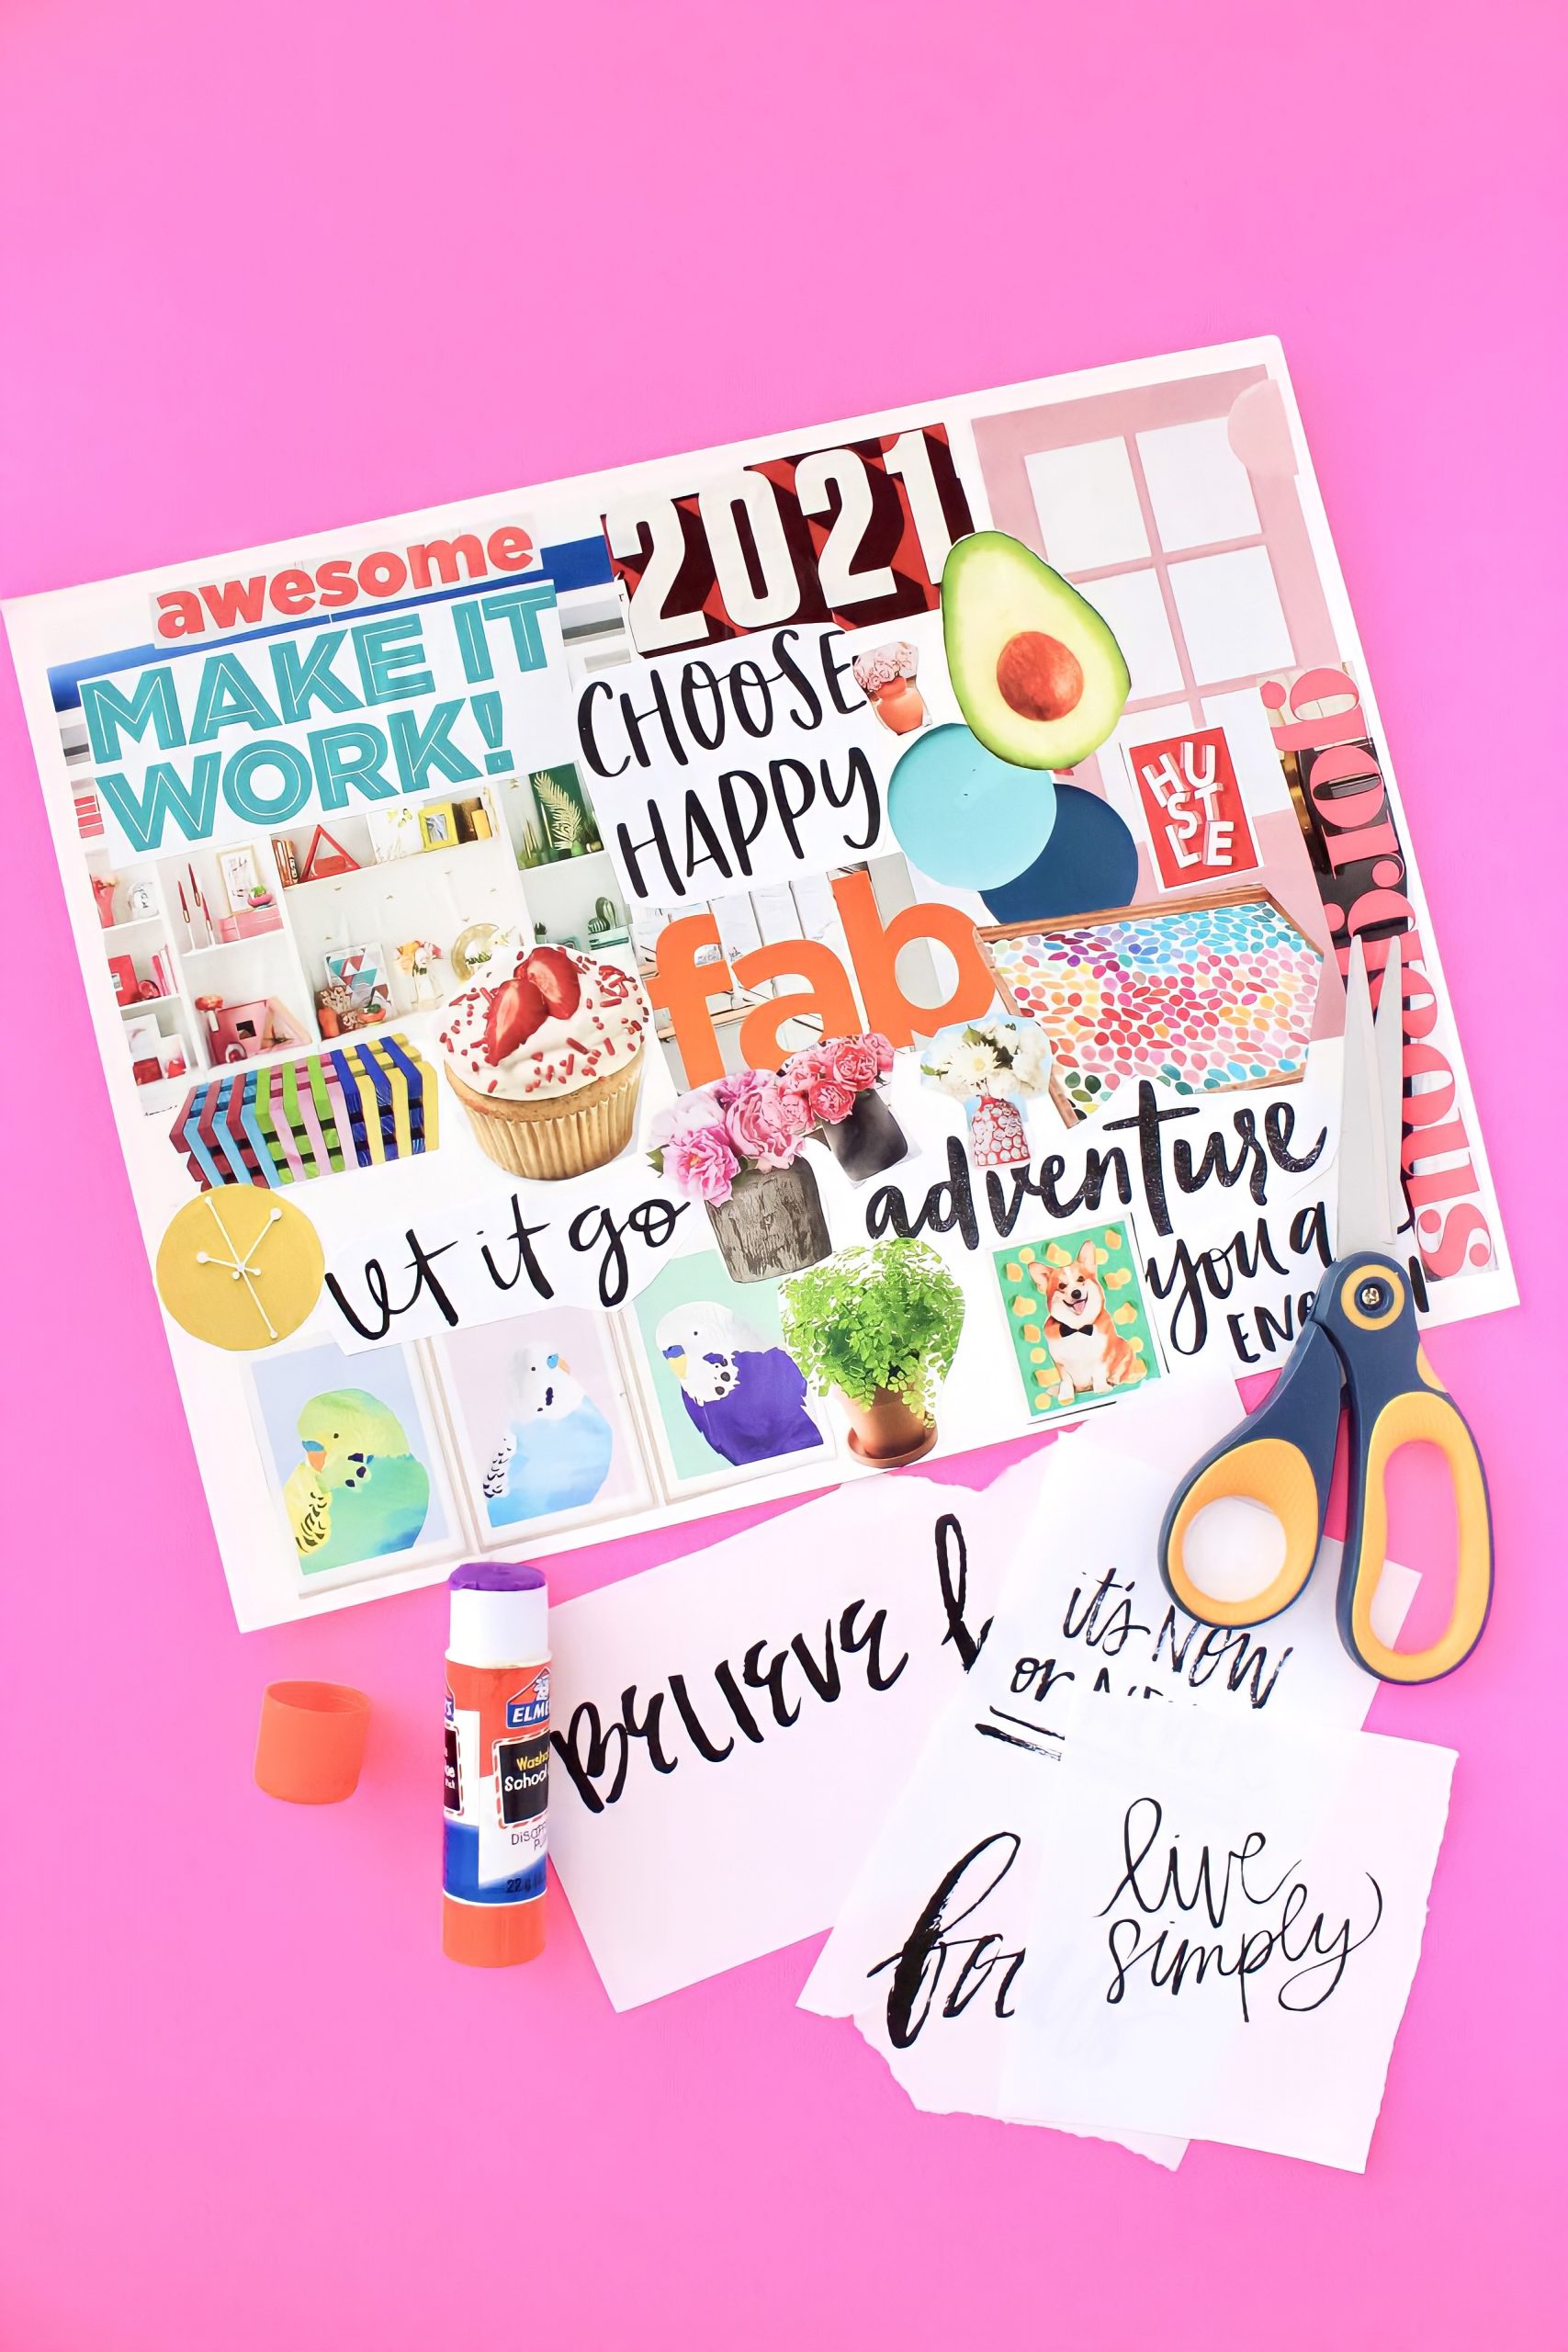 Printable Vision Board Stickers | Masha Plans